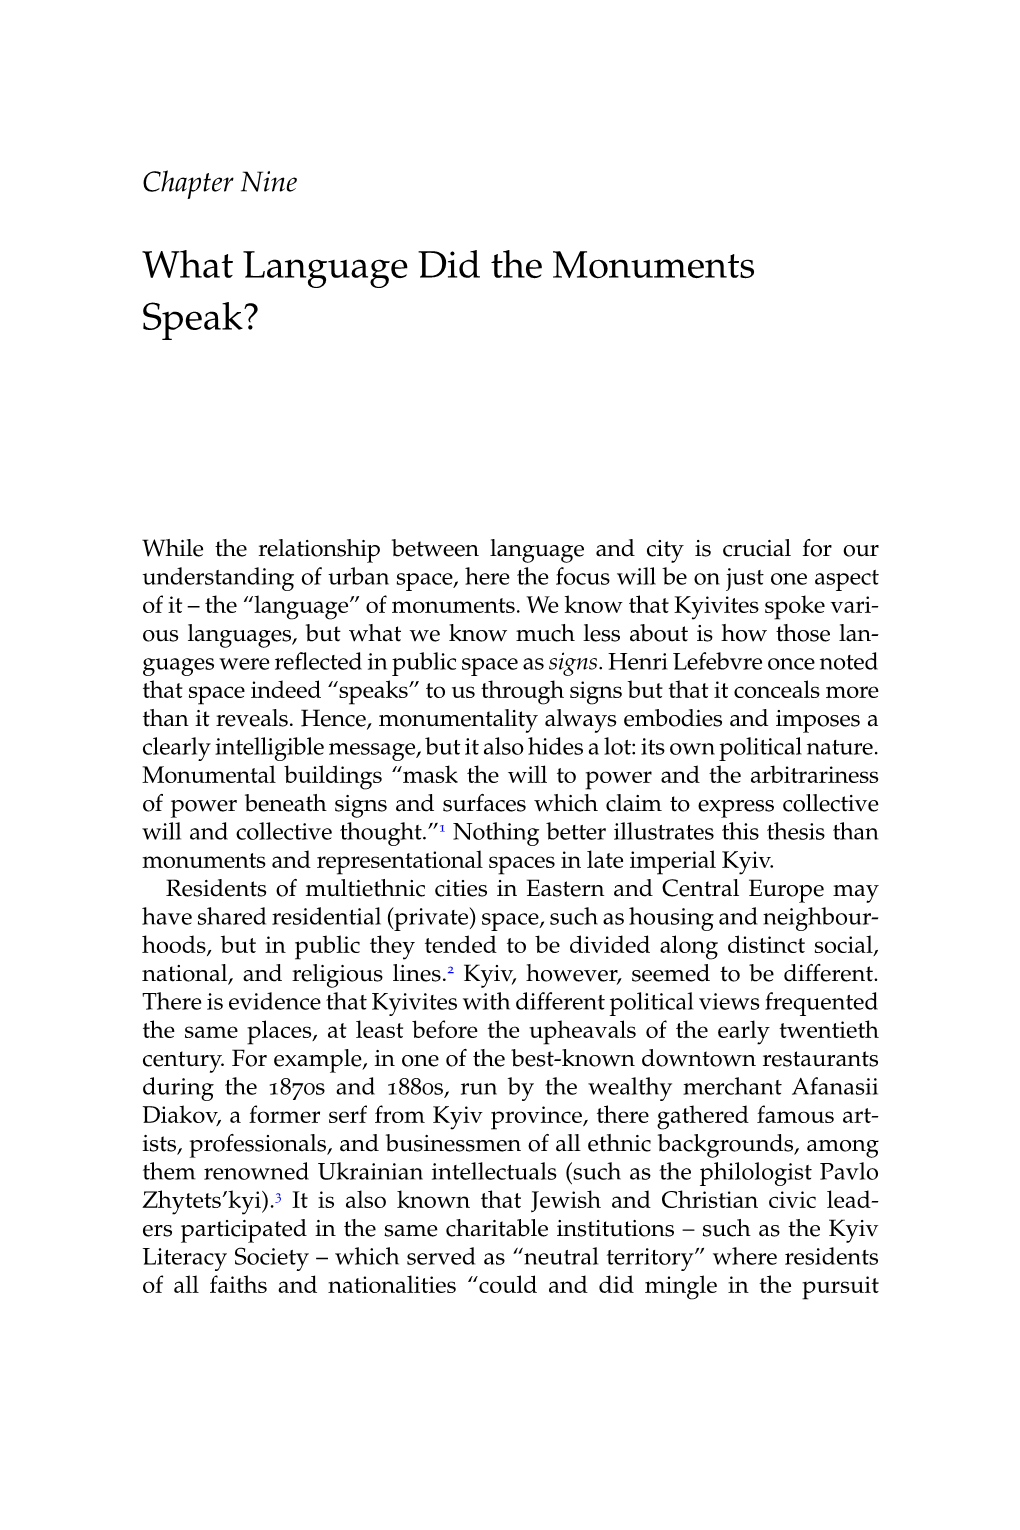 What Language Did the Monuments Speak?